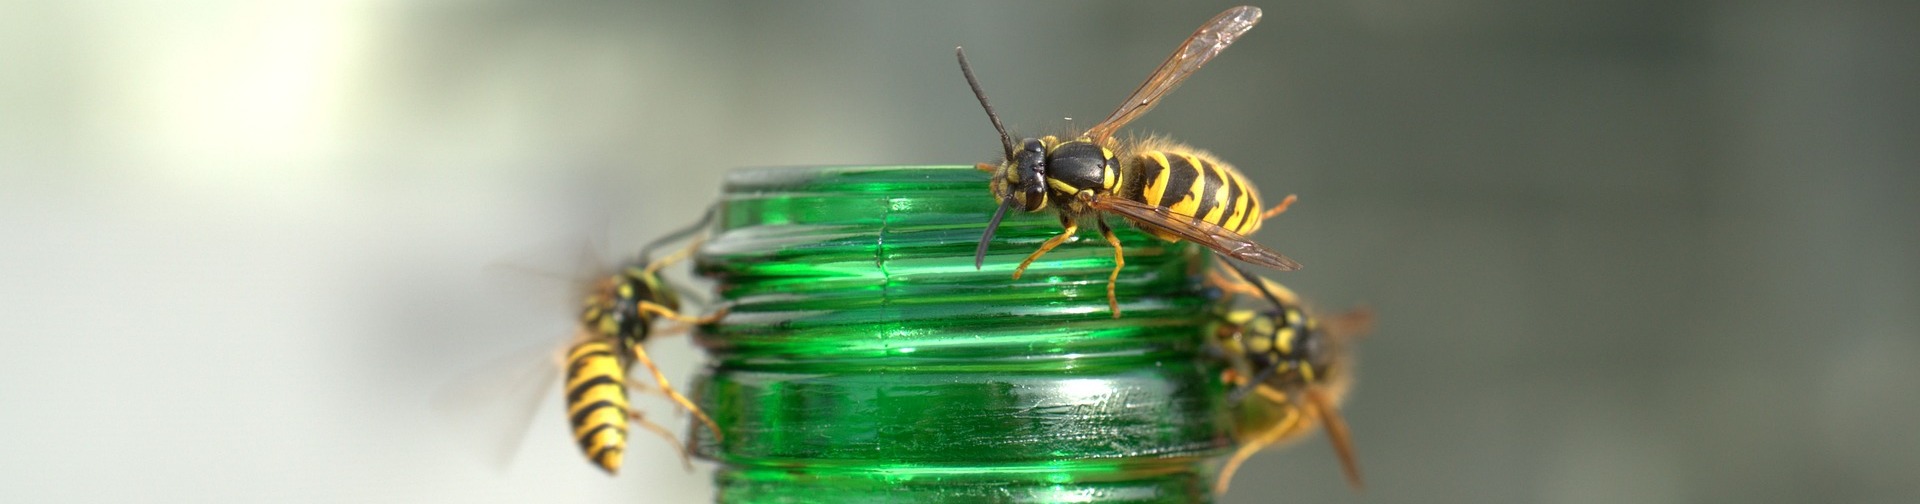 wasps on a bottle